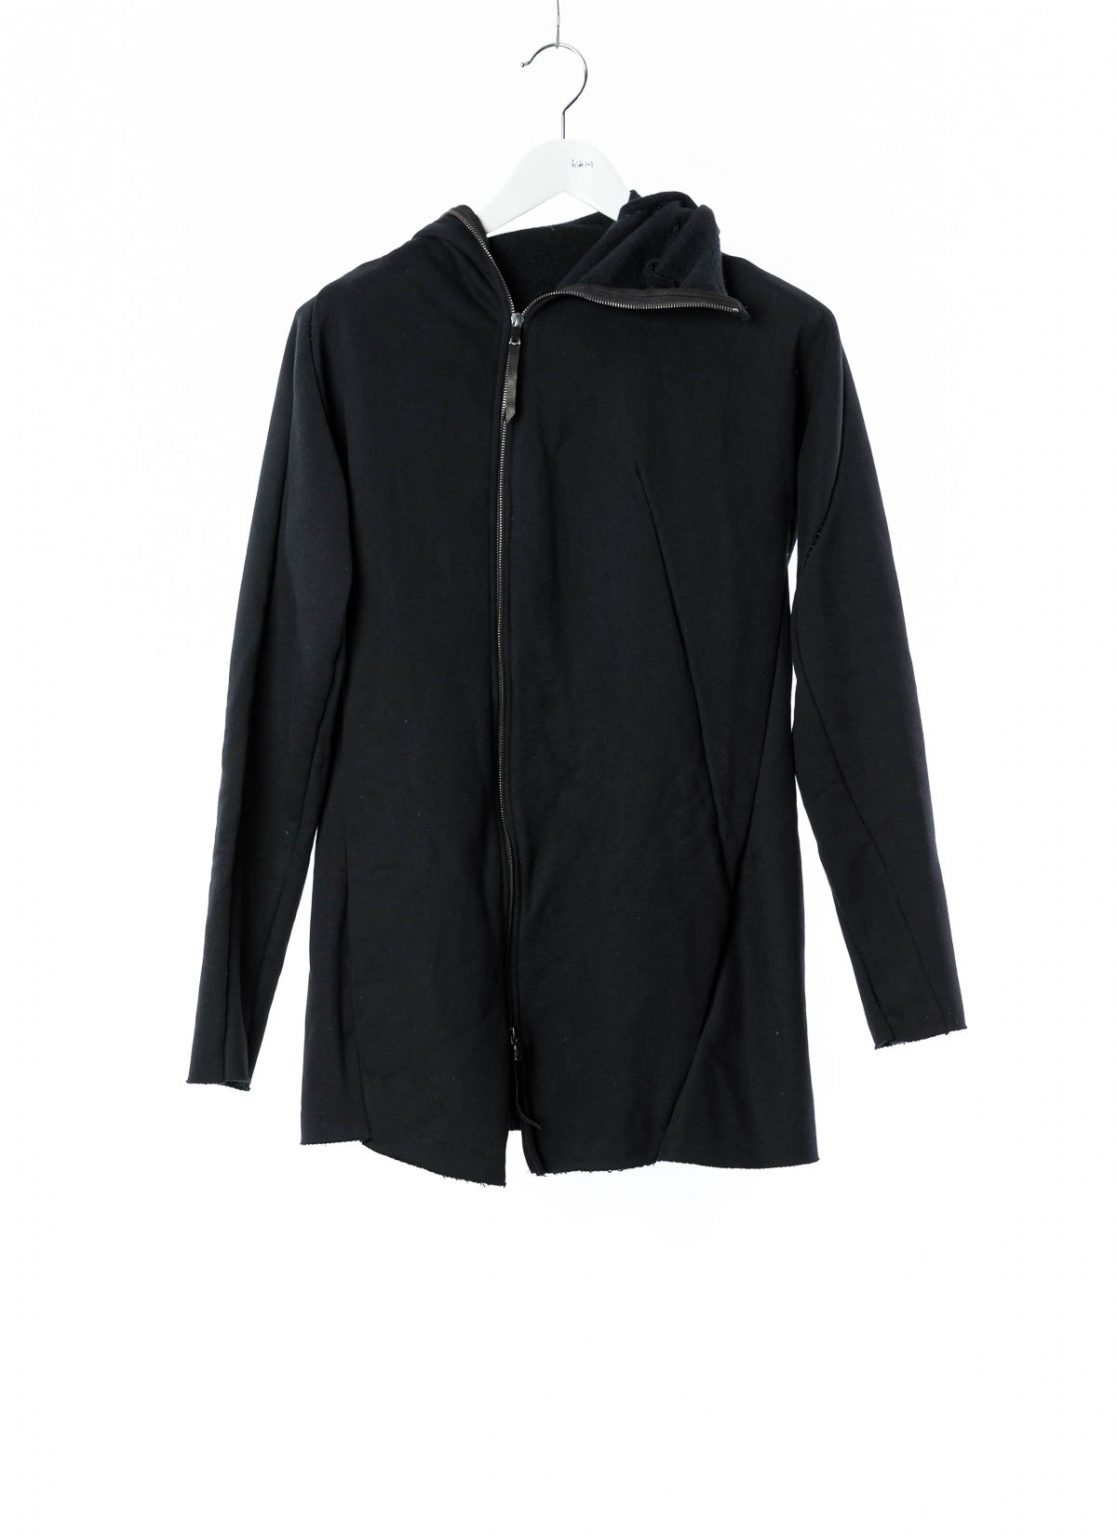 hide-m | LEON EMANUEL BLANCK Zipped Hoody Jacket, black cotton